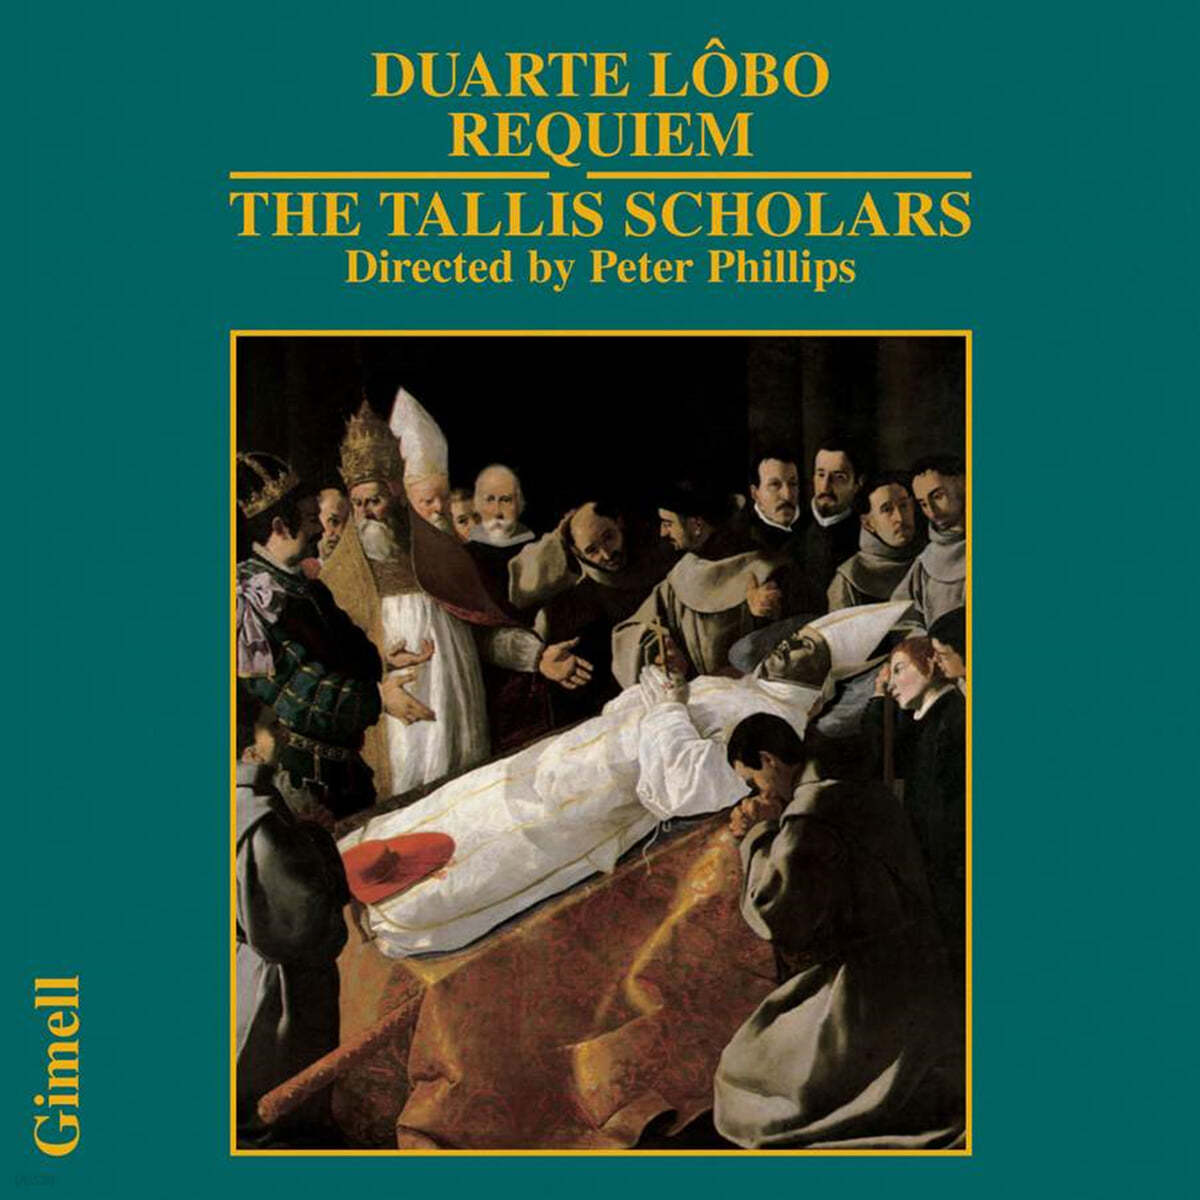 The Tallis Scholars 두아르테 로보: 레퀴엠, 미사 (Duarte Lobo: Requiem for six voices, Missa Vox clamantis) 